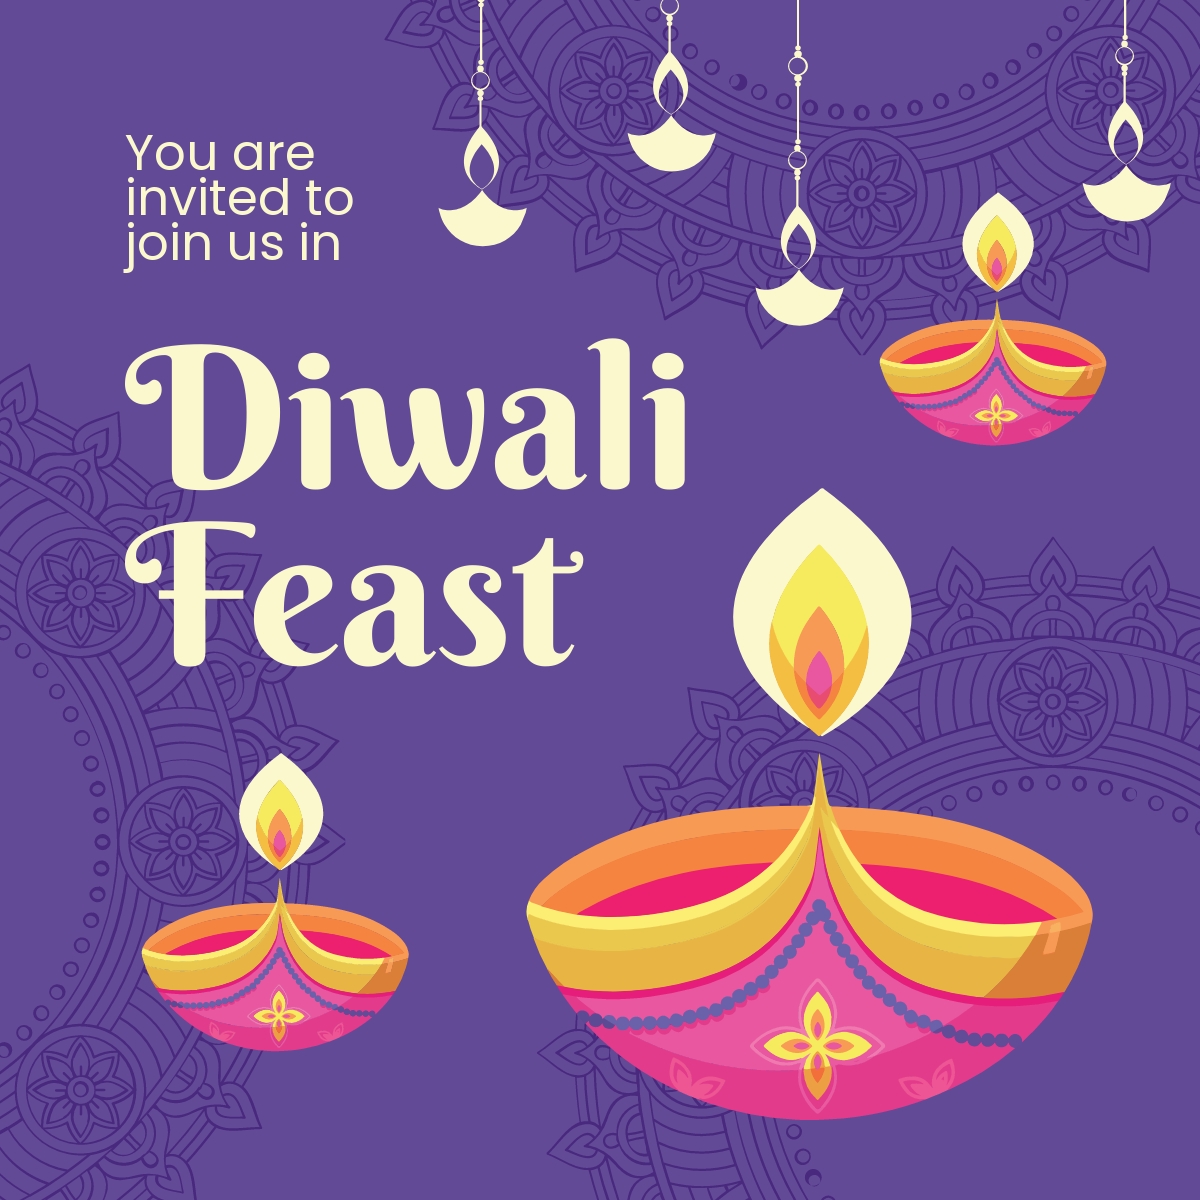 Diwali Feast Linkedin Post